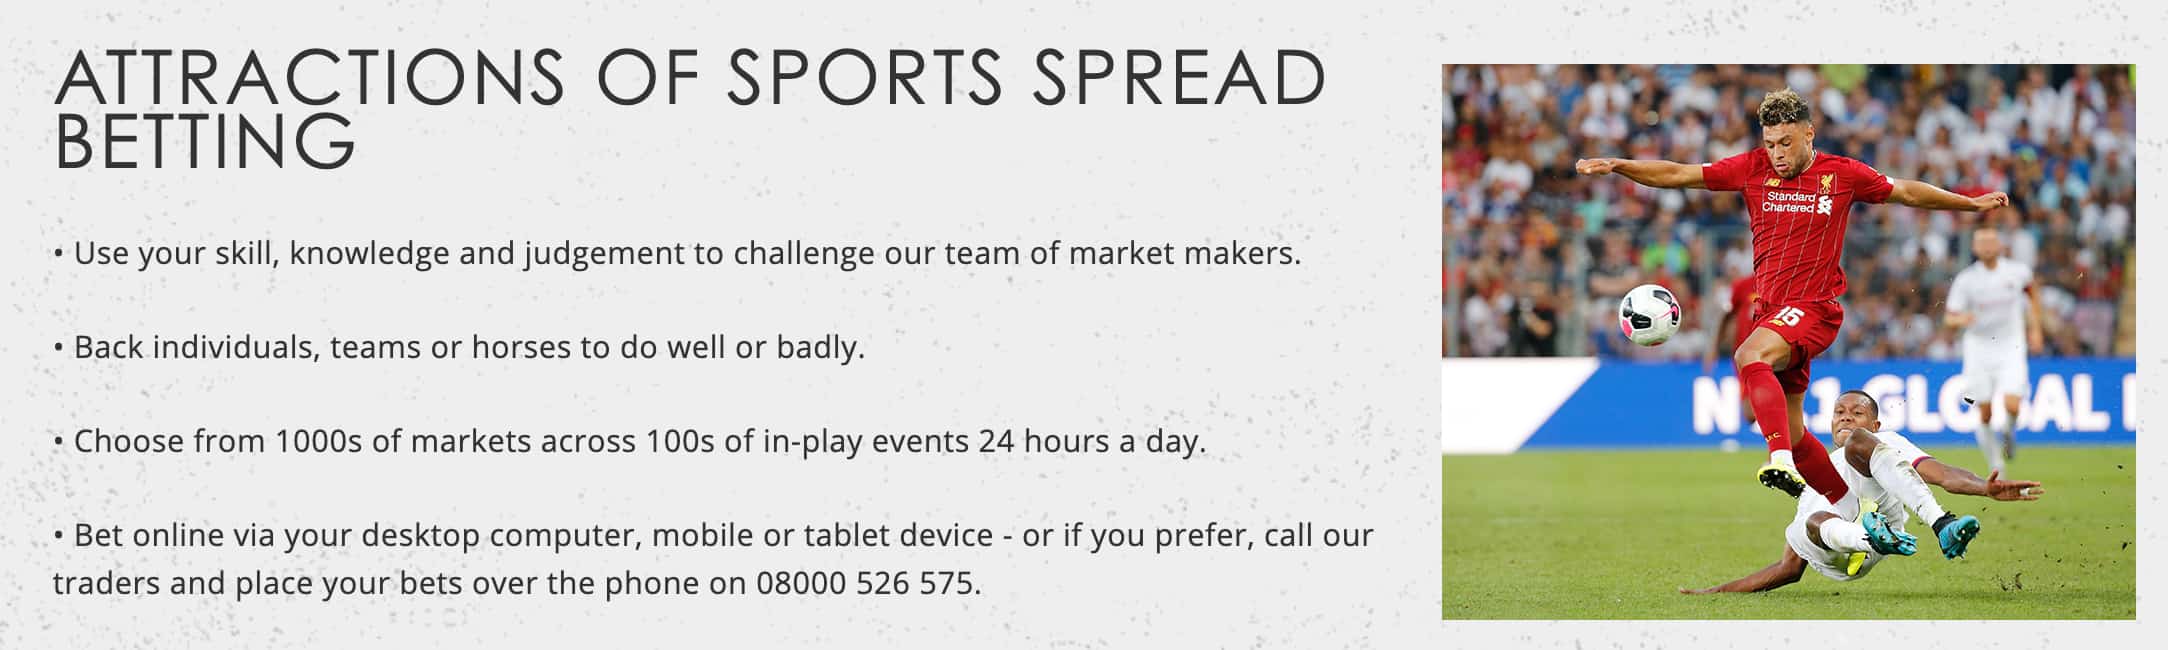 uk sports spread betting companies